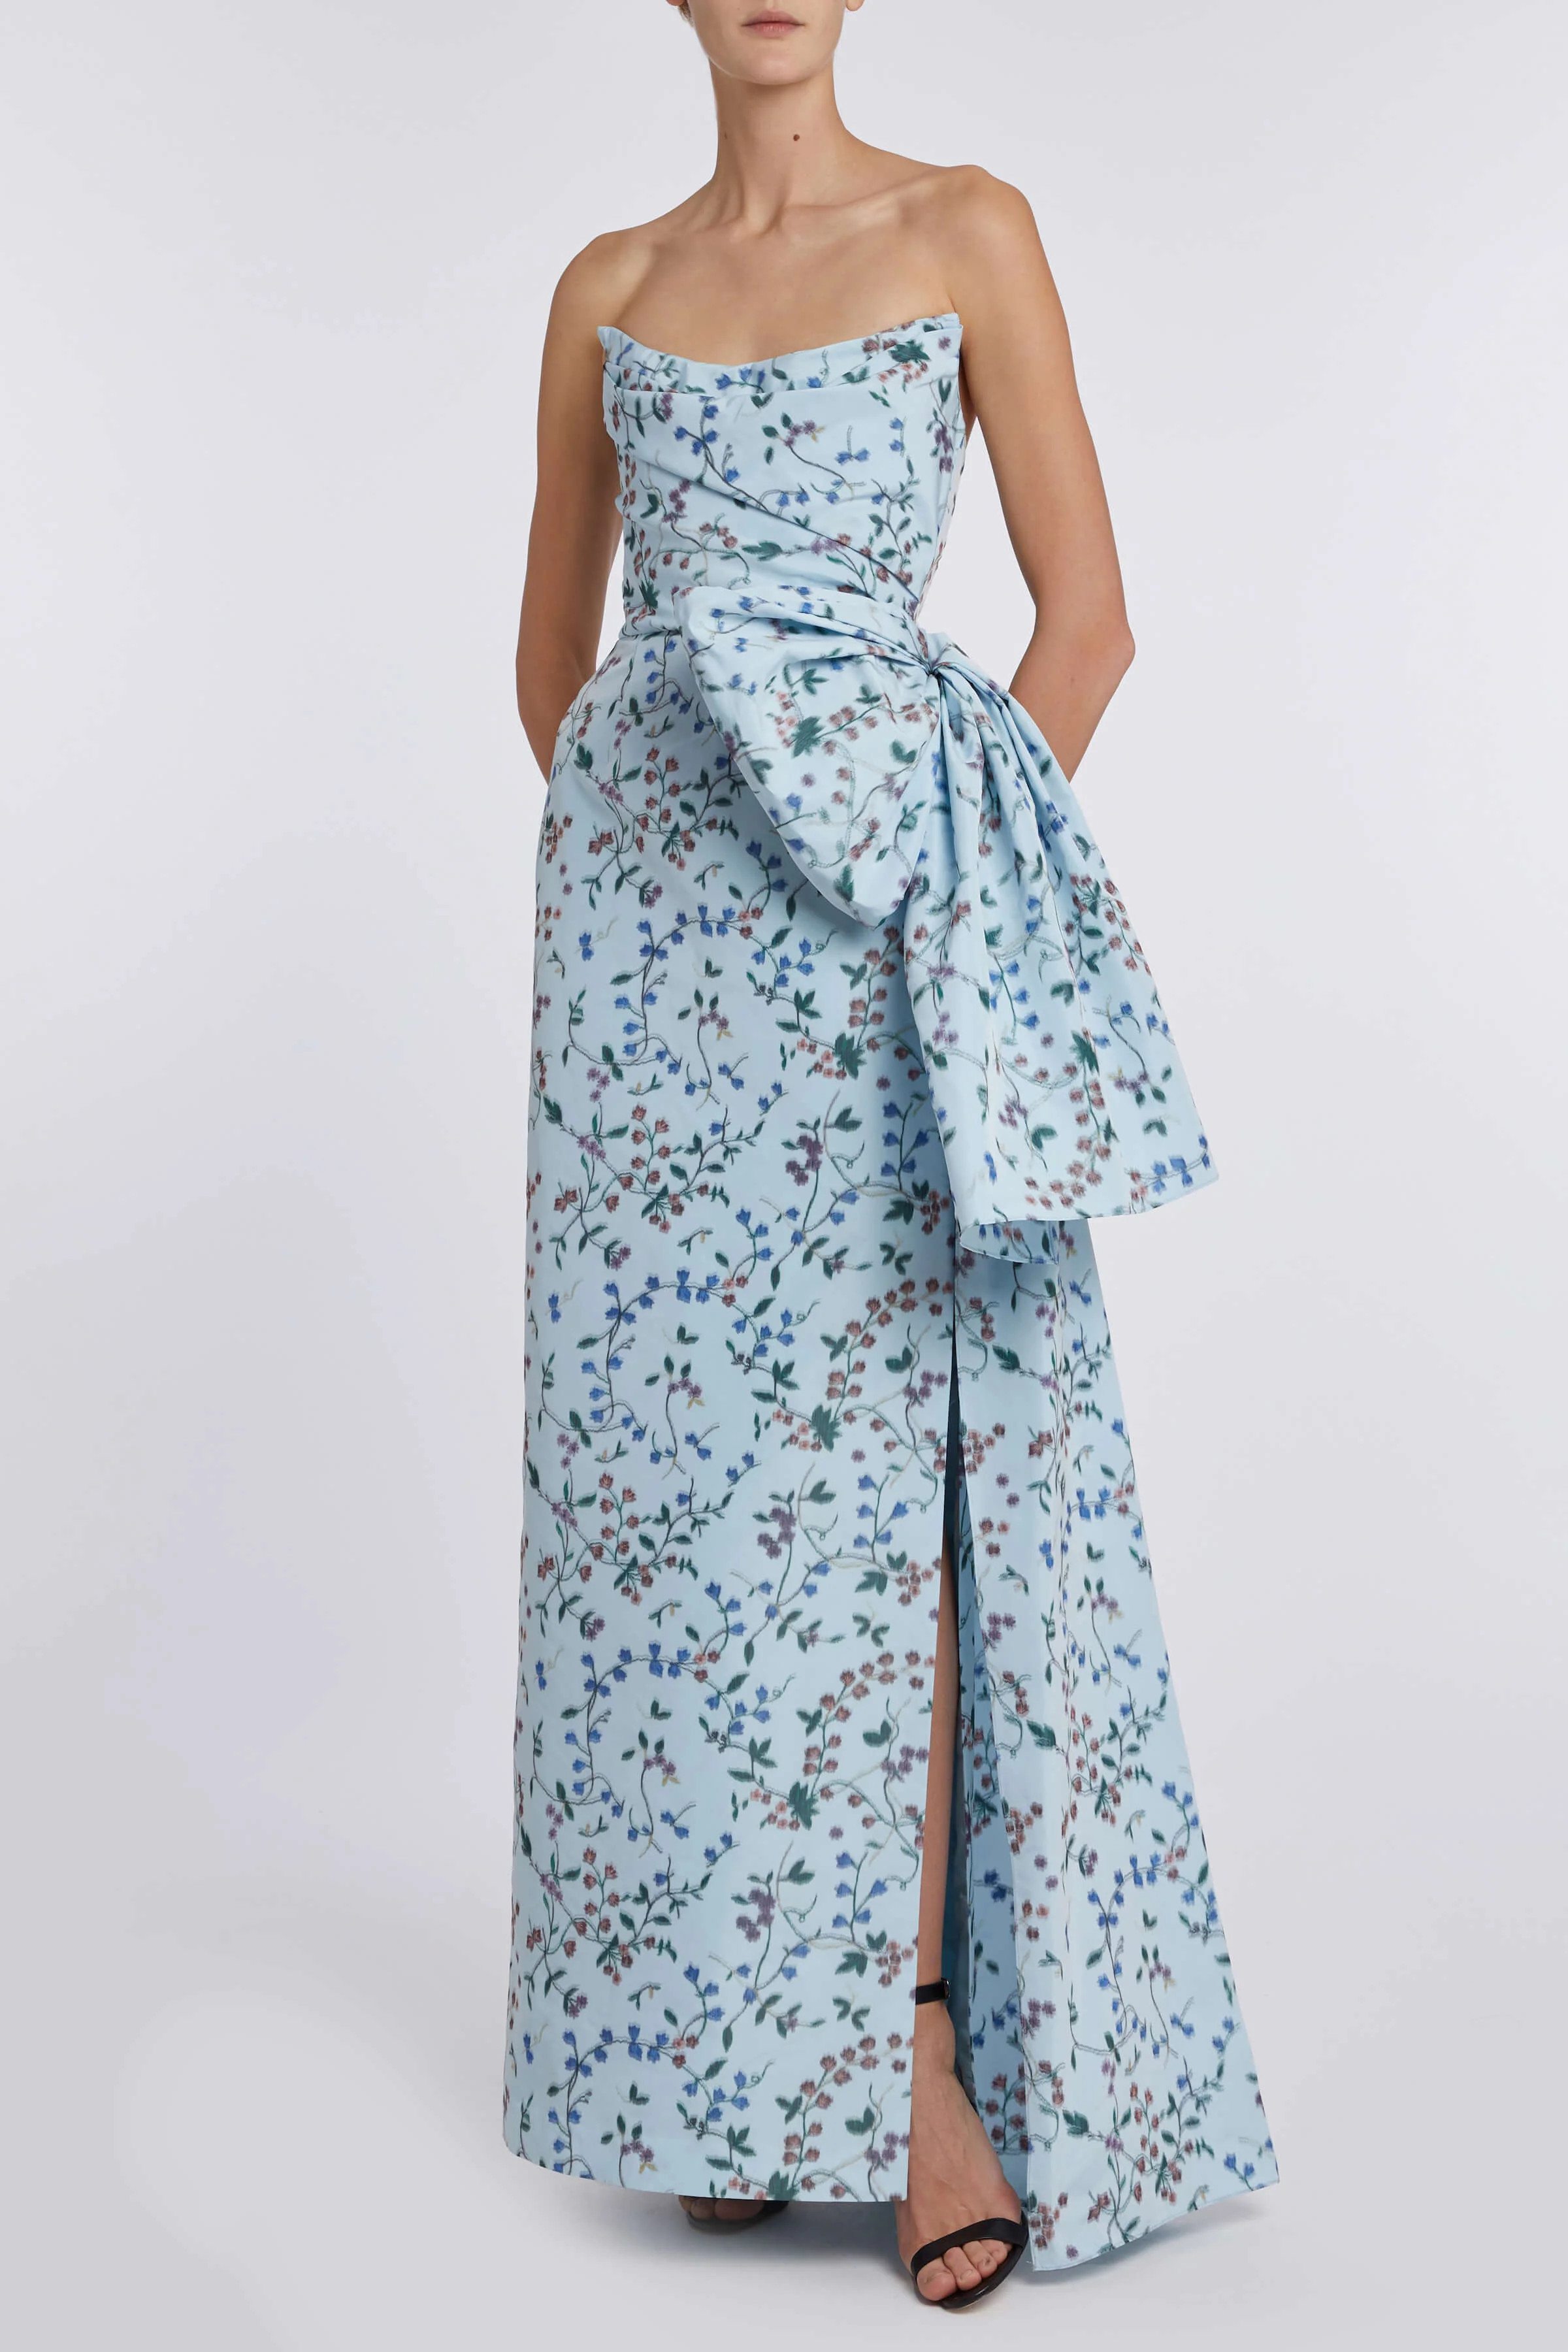 Athena Blue Vine Ikat Strapless Draped Bodice Gown | Markarian